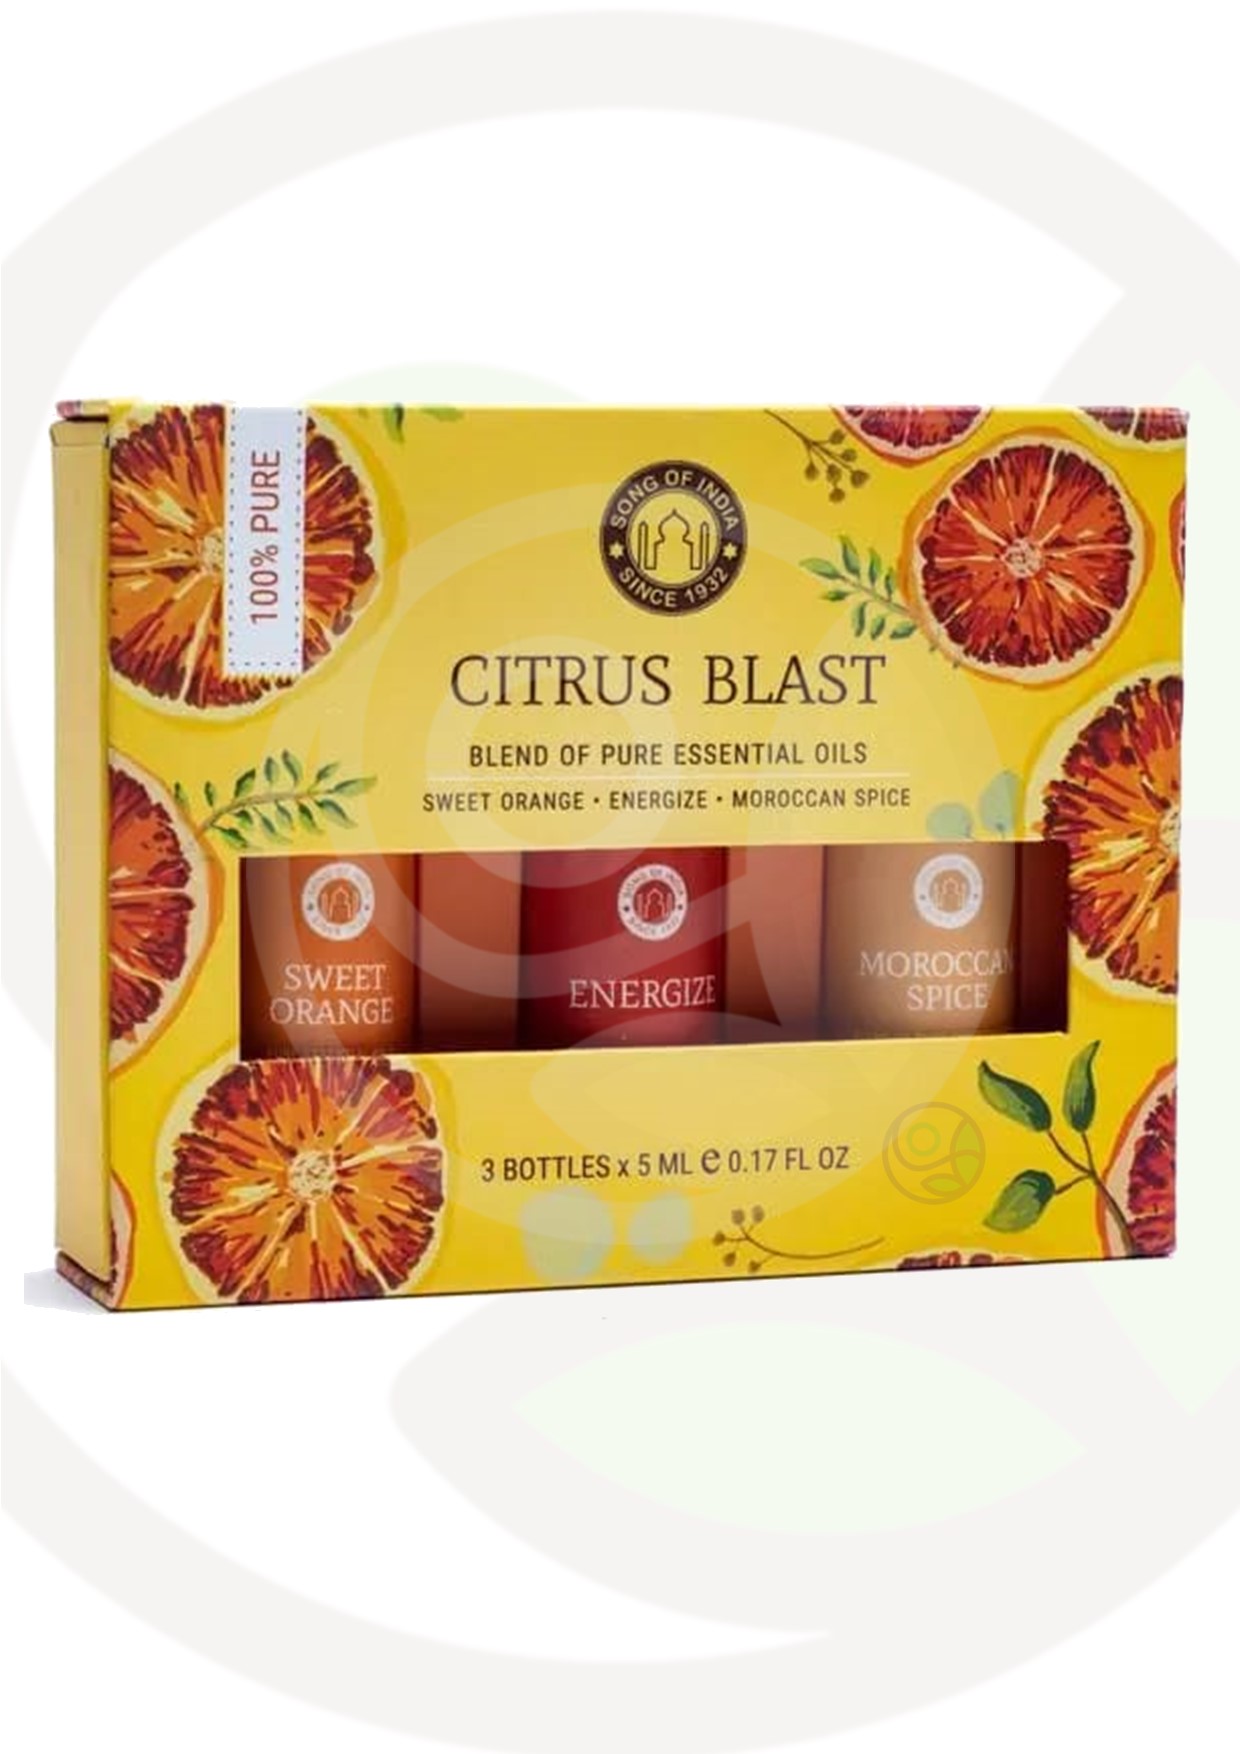 Featured image for “Oli essenziali aromaterapia citrus blast - Set”